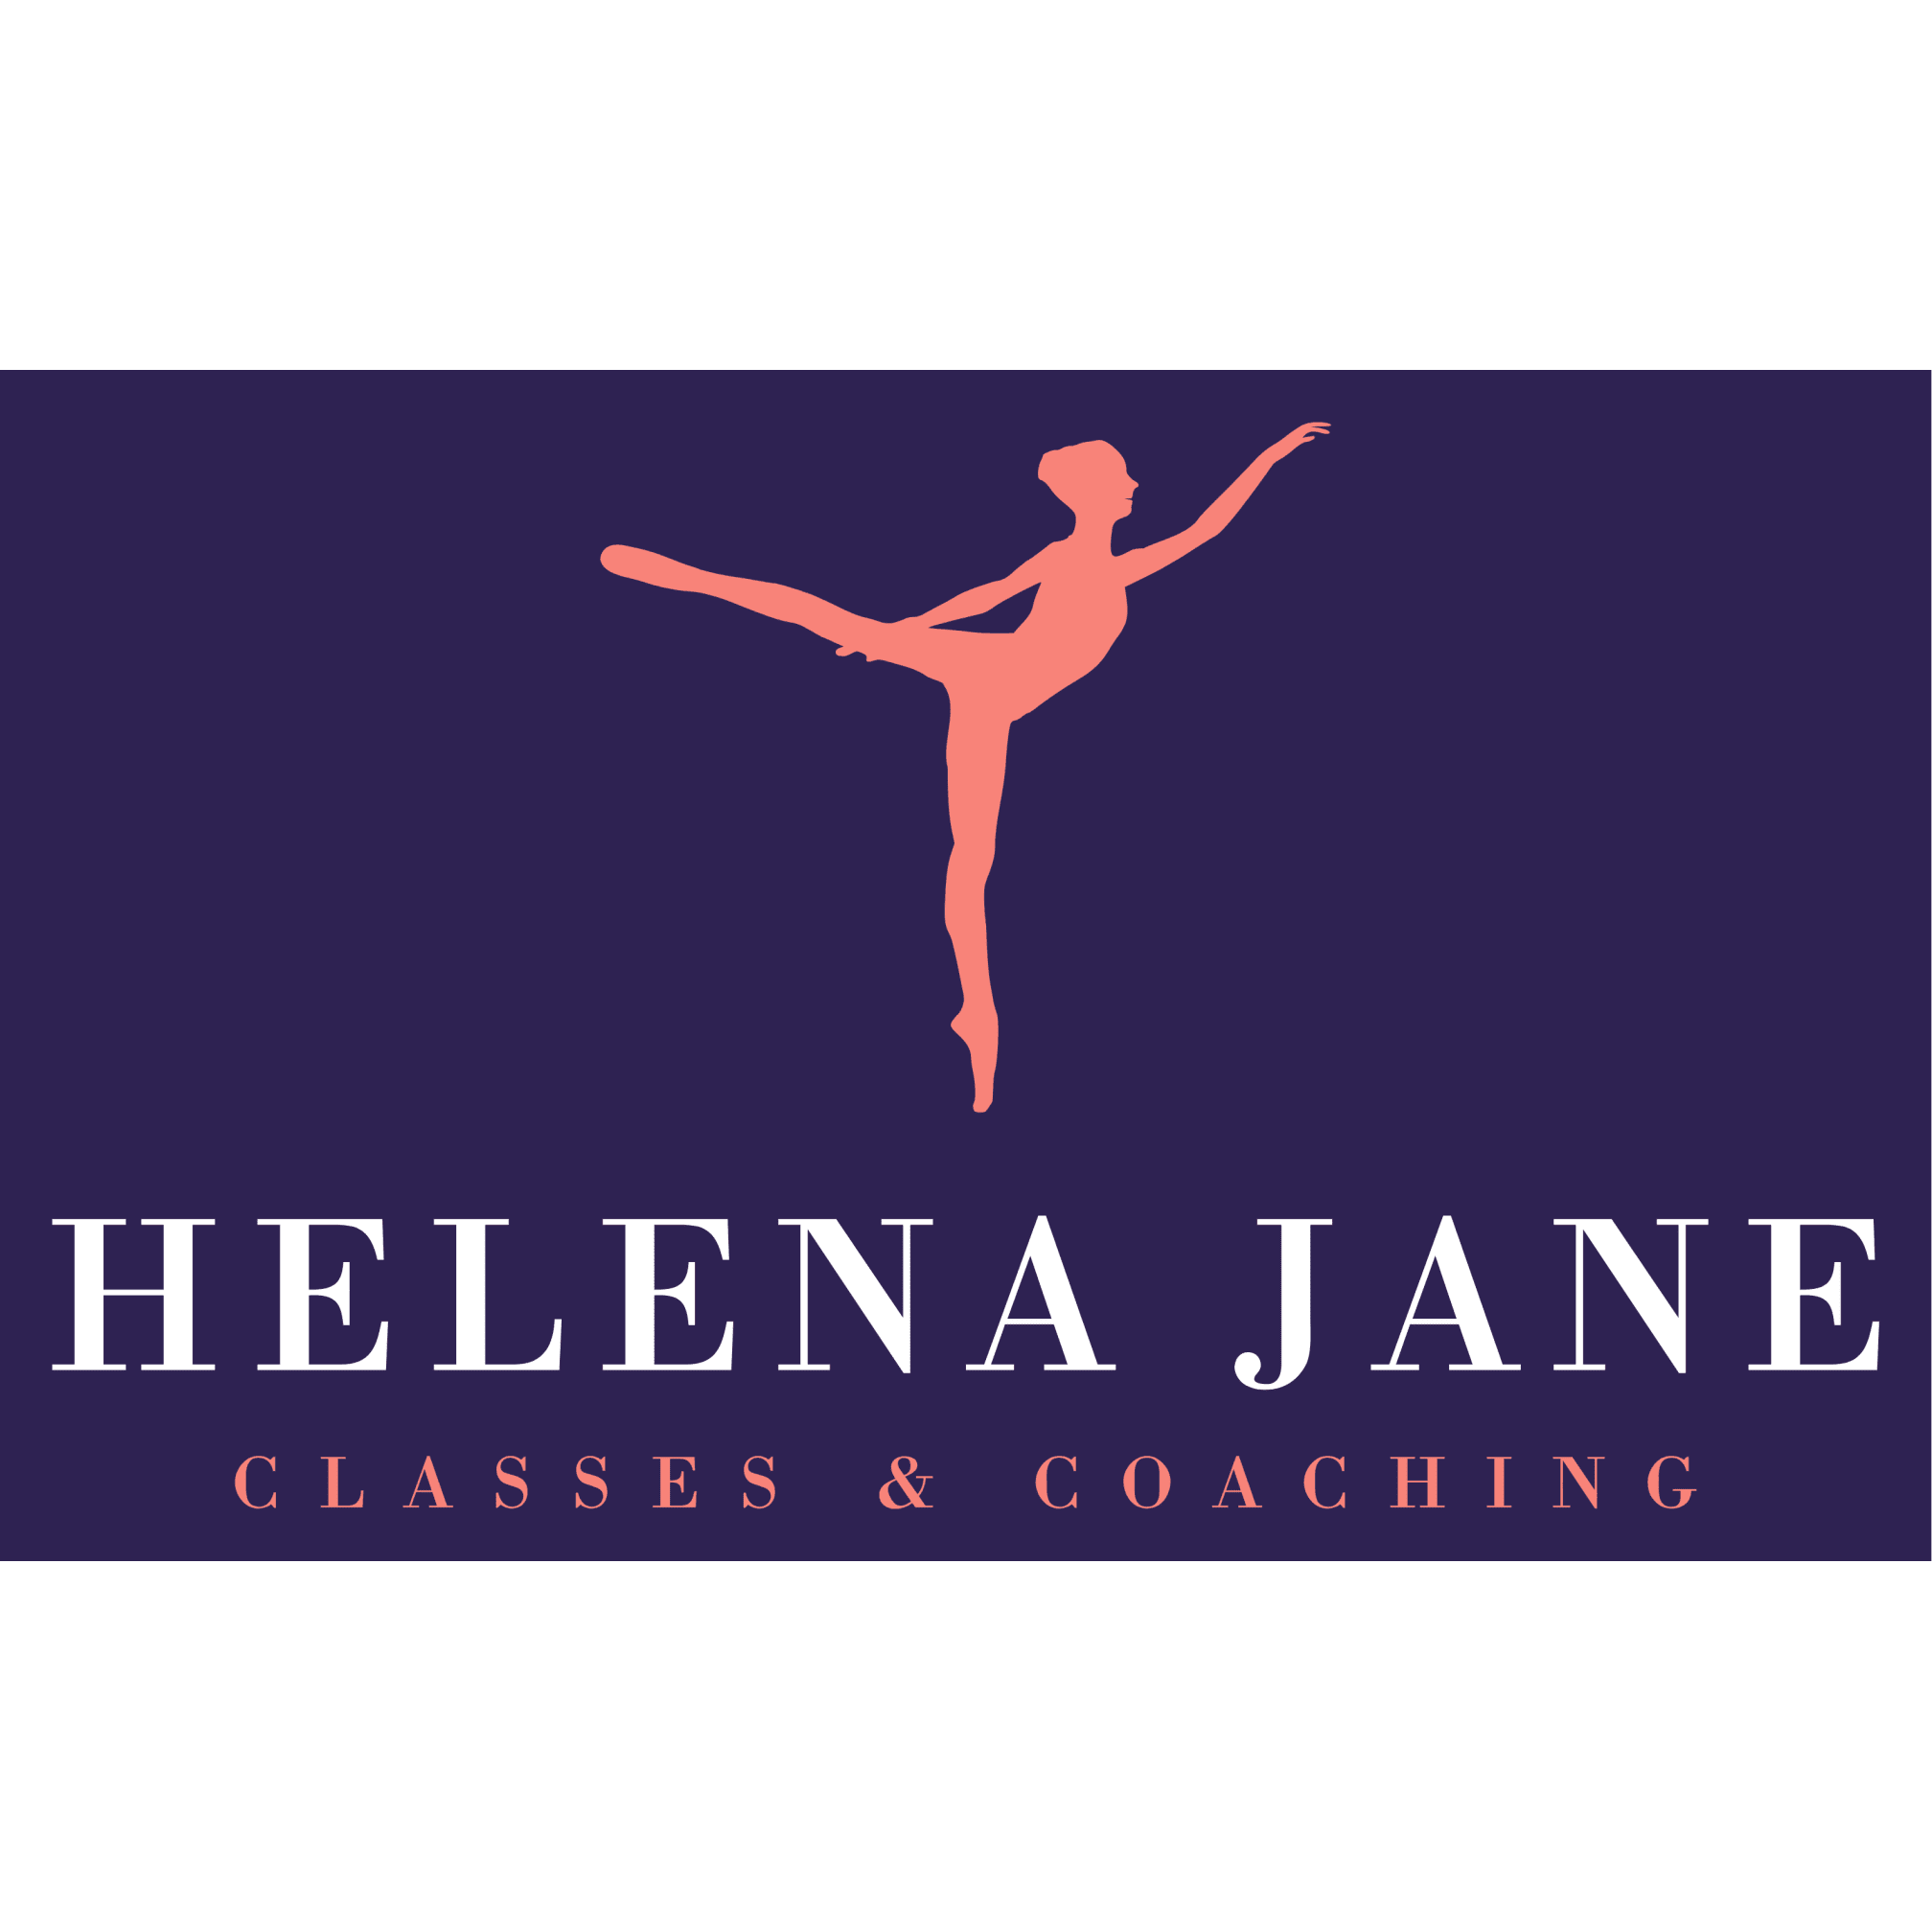 Helena Jane Classes & Coaching Logo